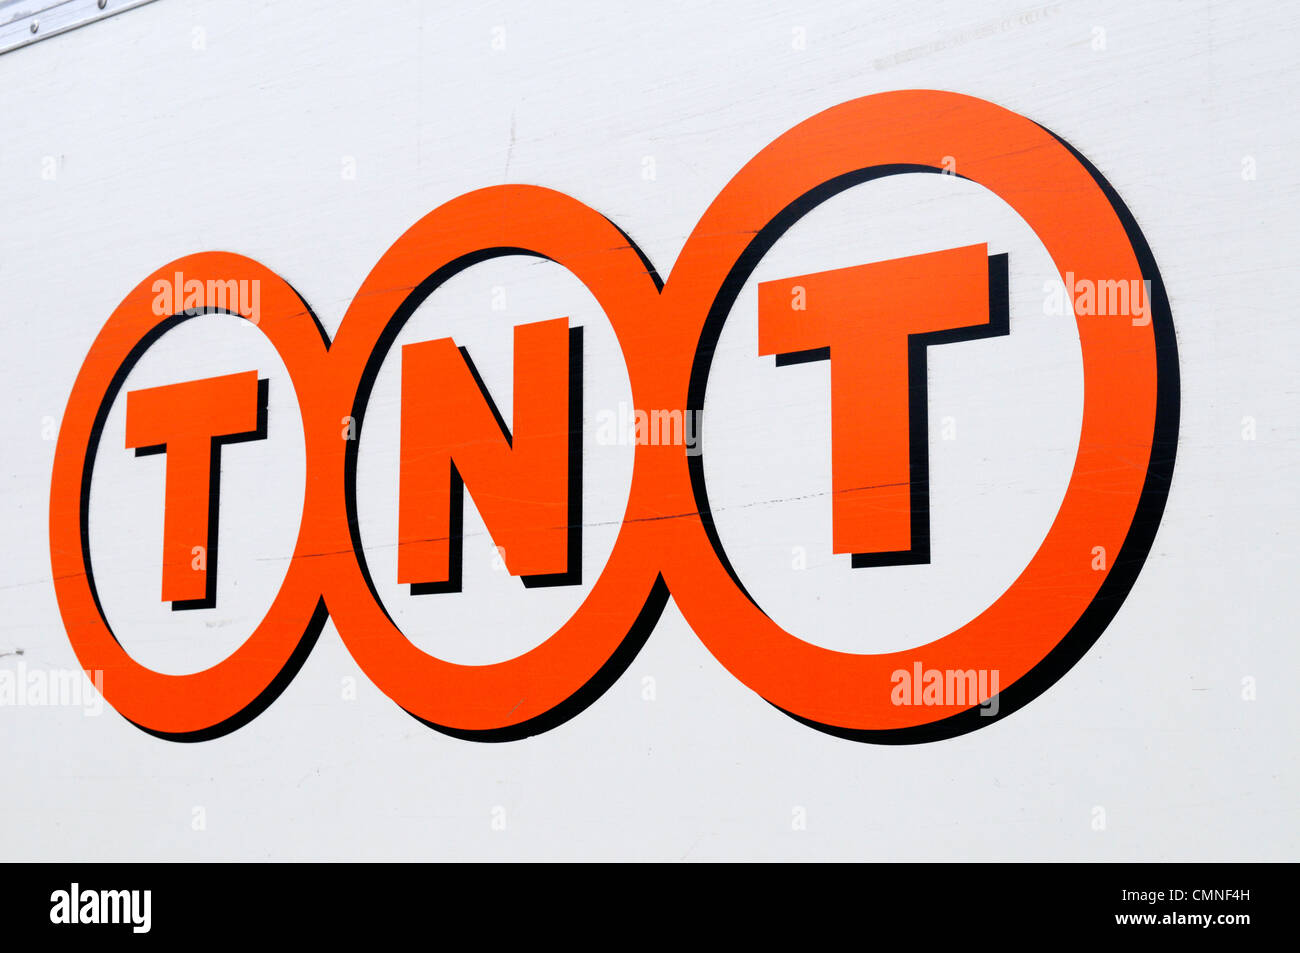 TNT Global Express Courier Logo, Cambridge, England, UK Stock Photo